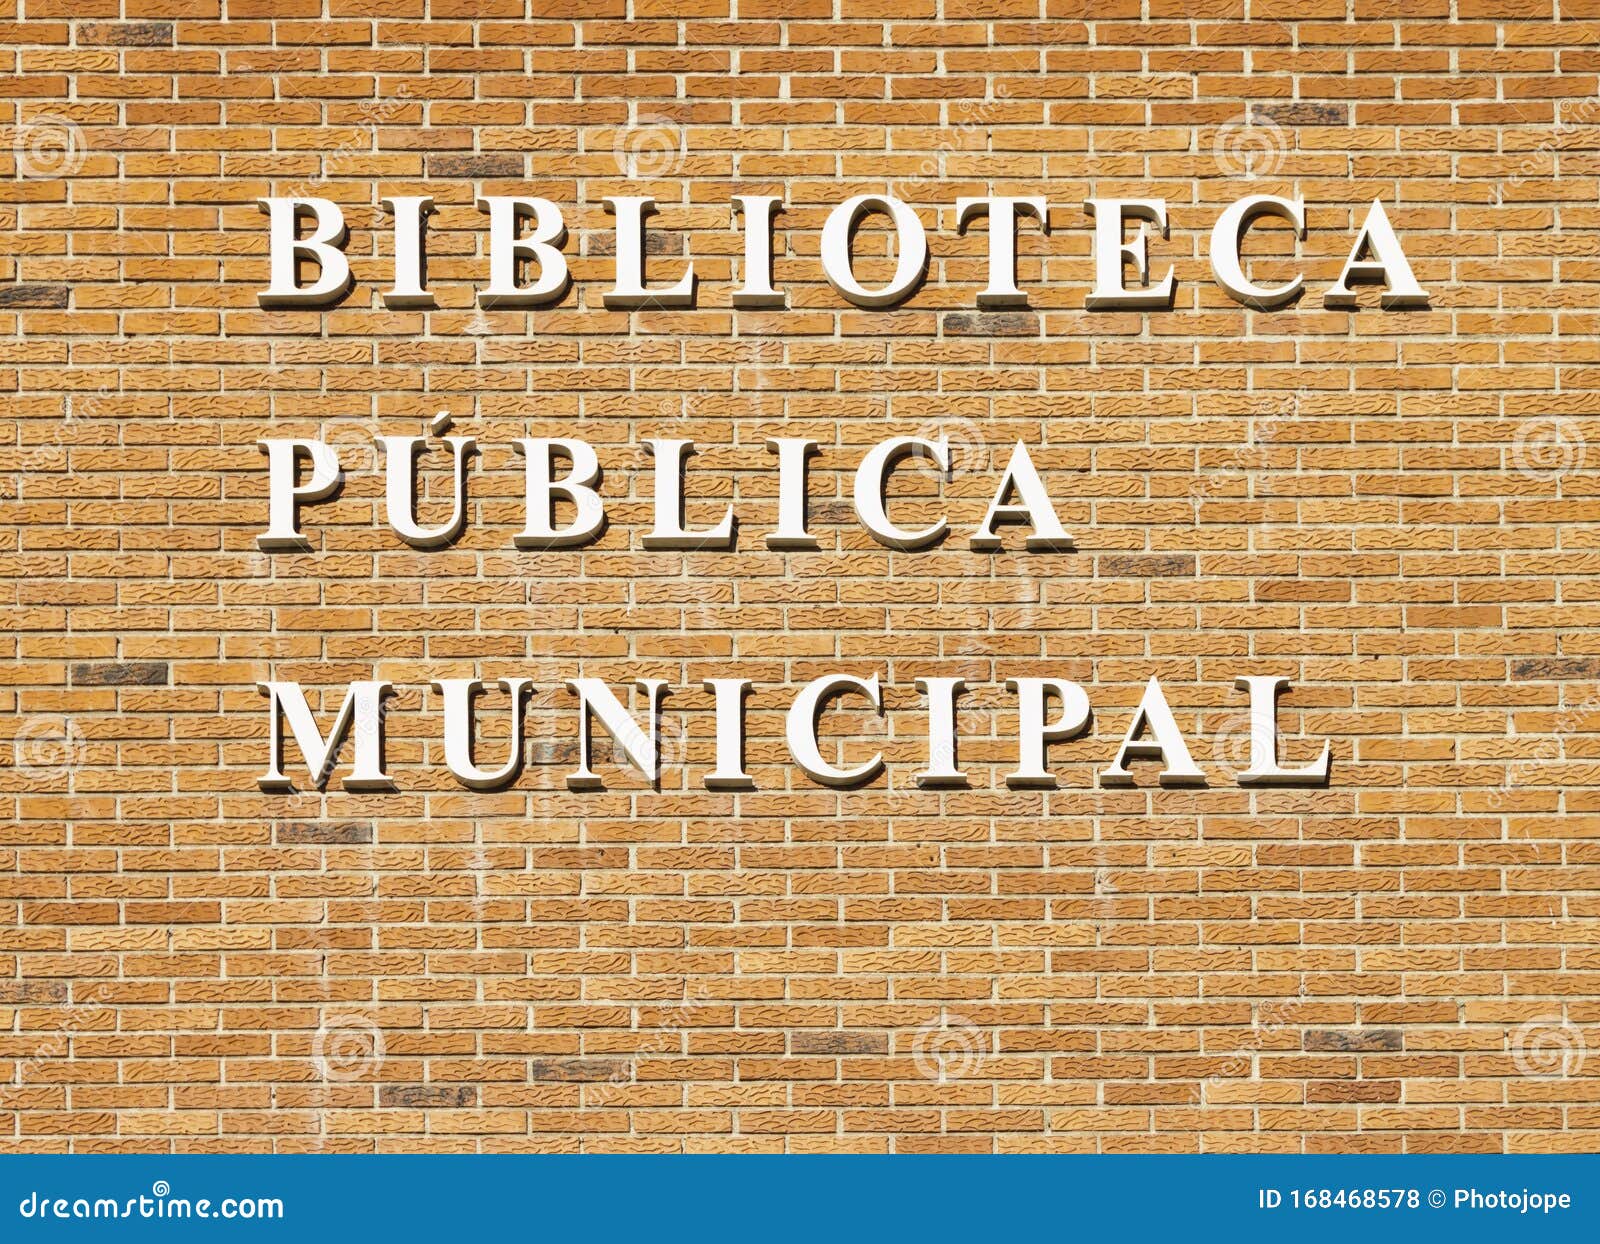 biblioteca publica municipal sign. city public library in spanish